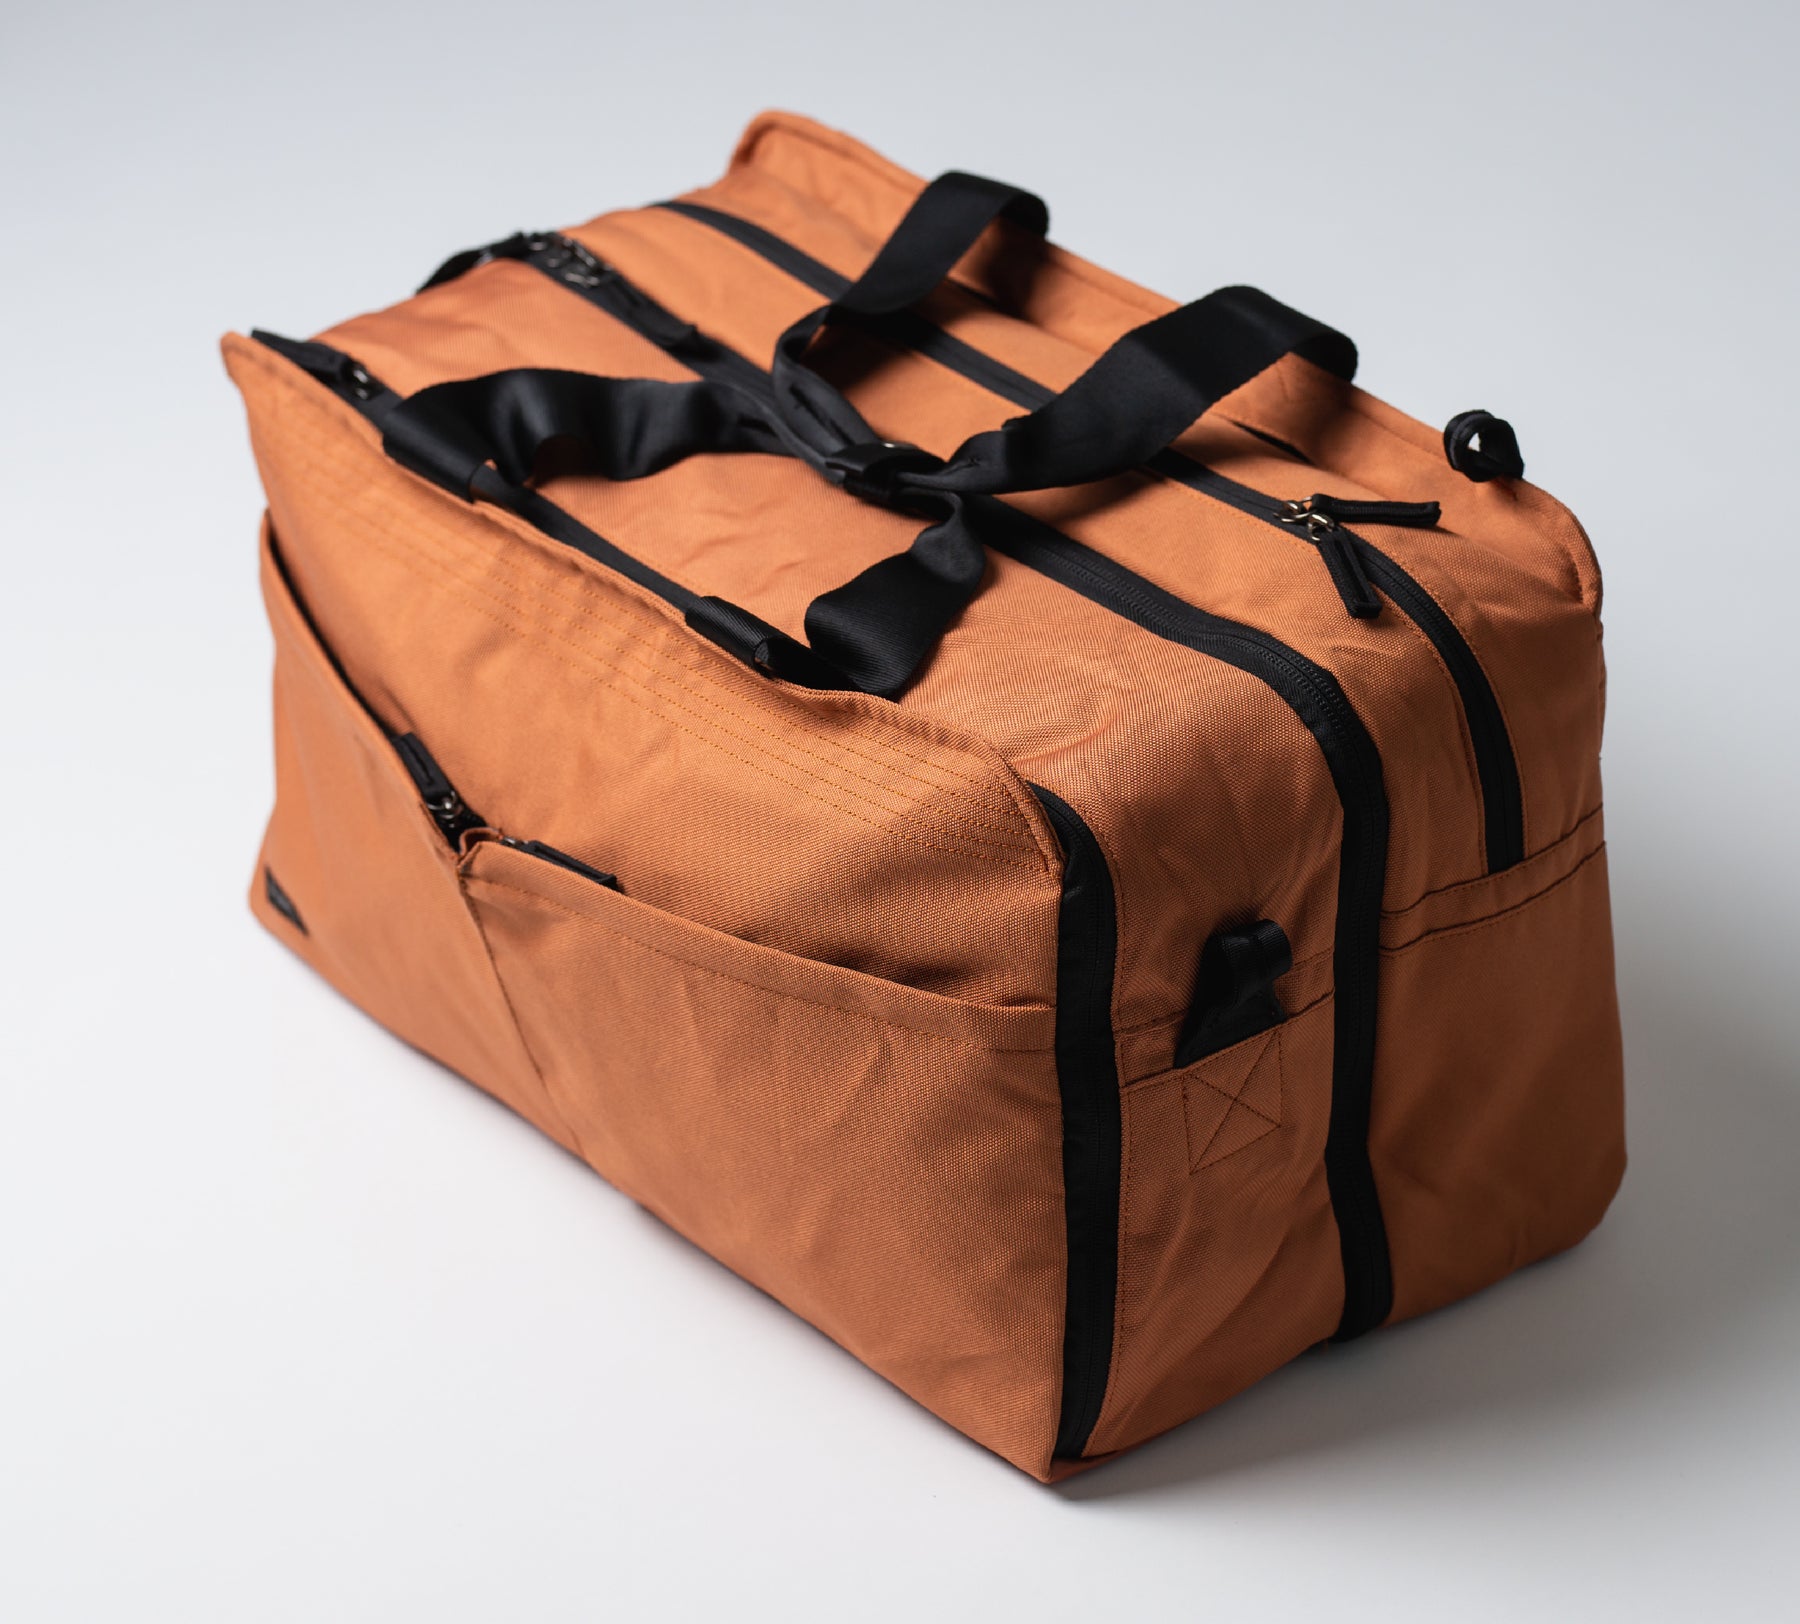 the 50L Backpack/duffel hybrid bag in adobe